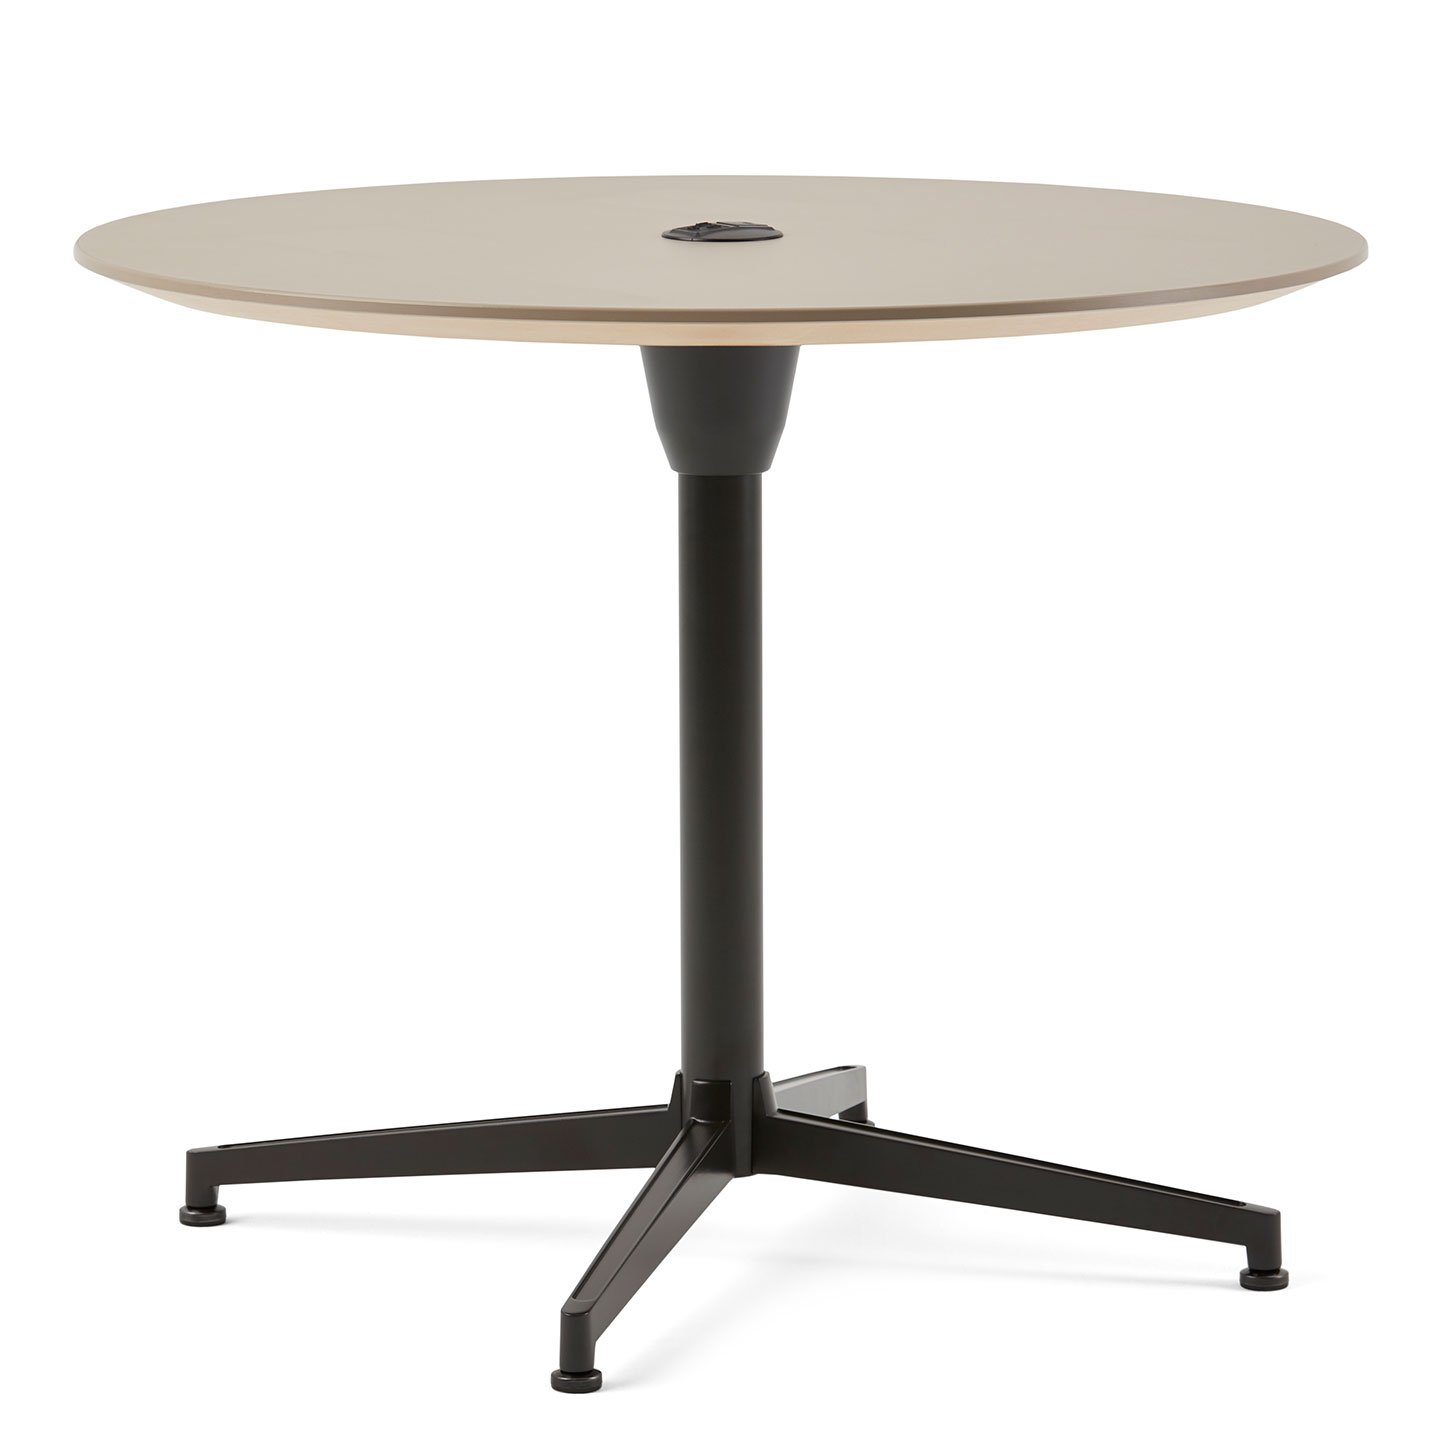 Haworth Jive Whitesweep table with circular top and 4 legs on the bottom